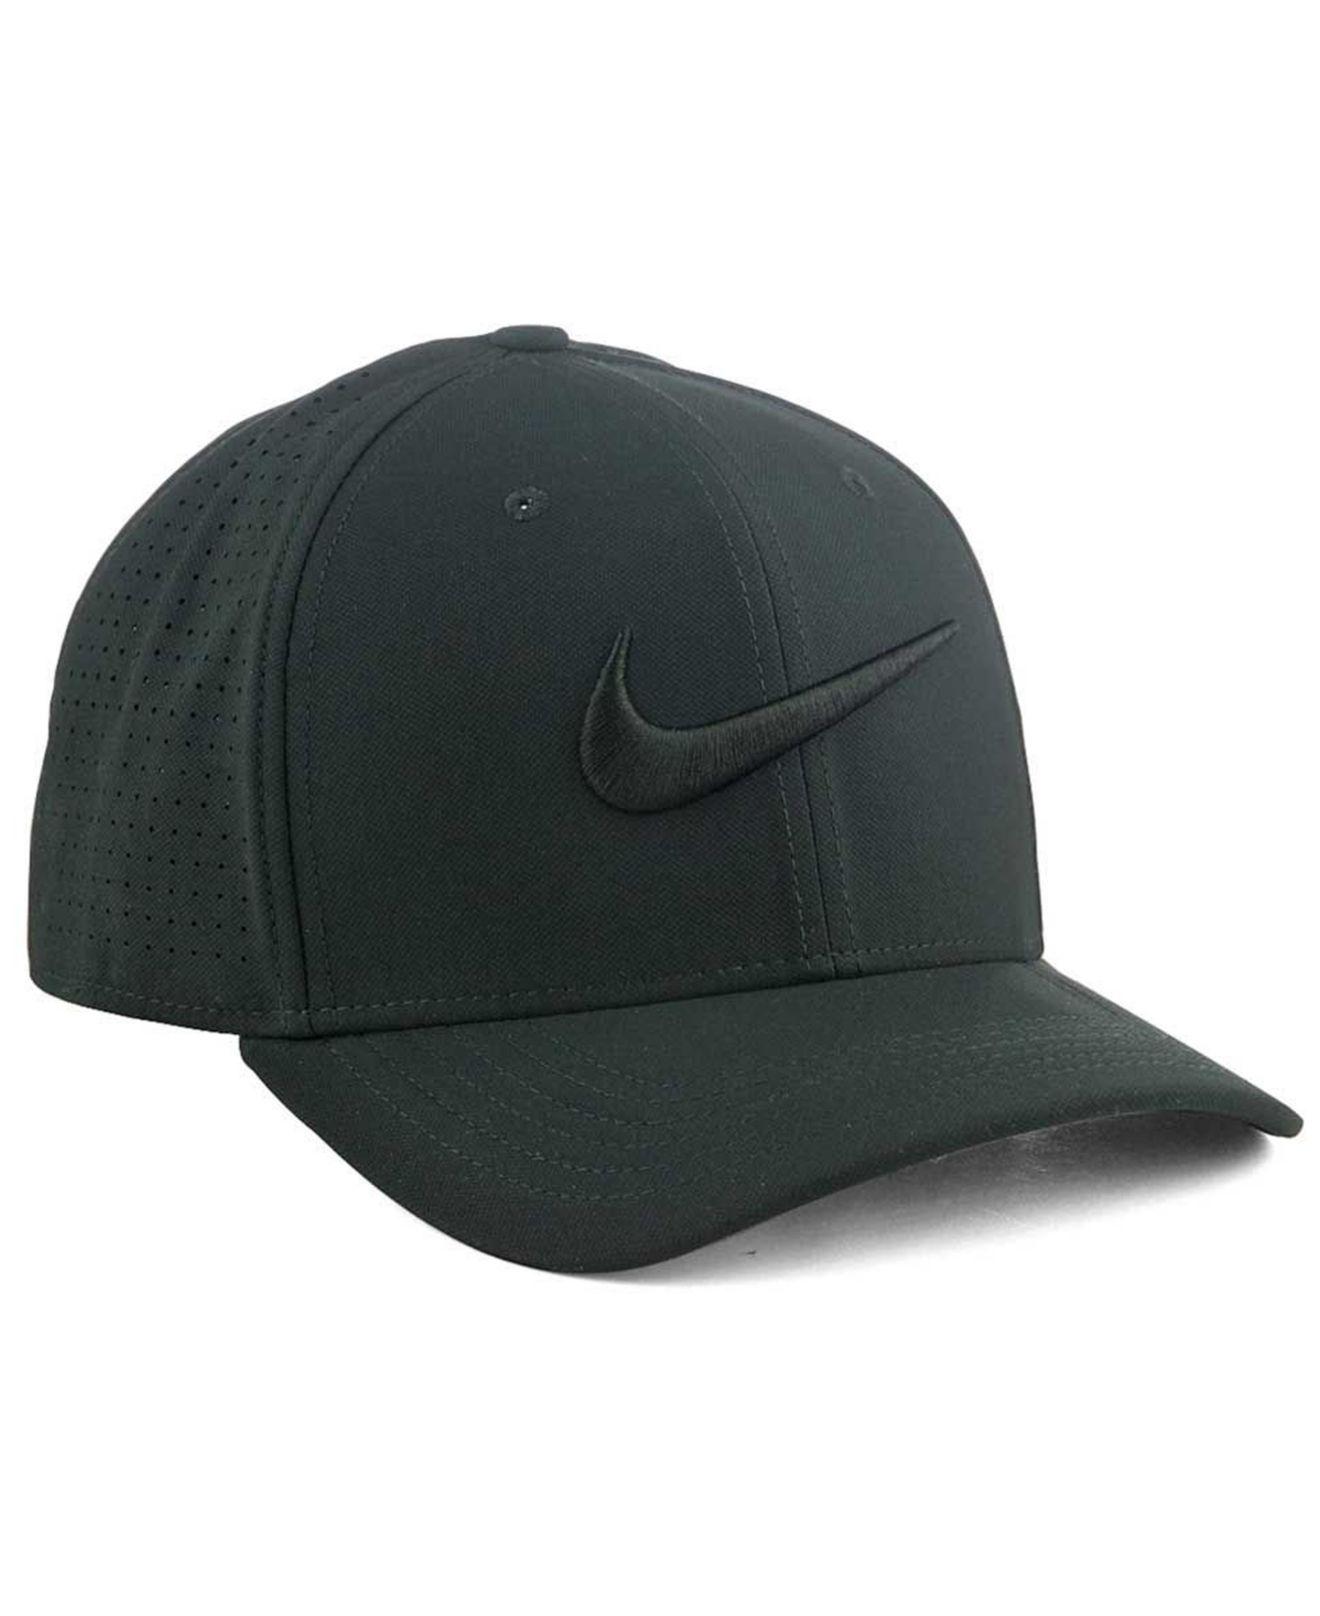 Nike Synthetic Vapor Flex Ii Cap in Black/Black (Black) for Men | Lyst